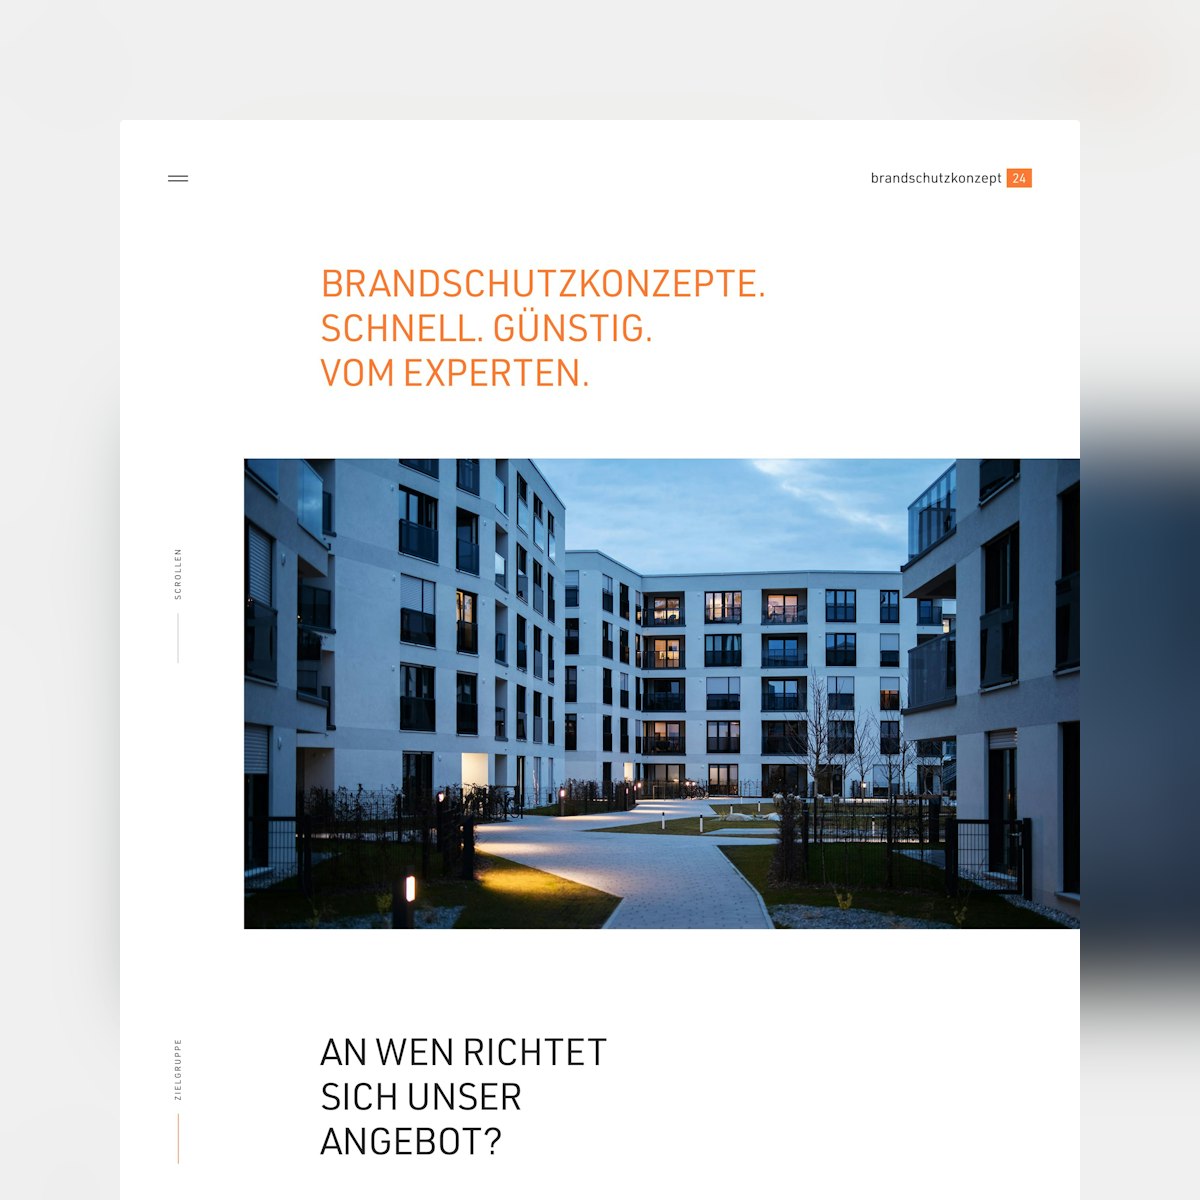 Profile Page screen design idea #67: Website Inspiration: Brandschutzkonzept24